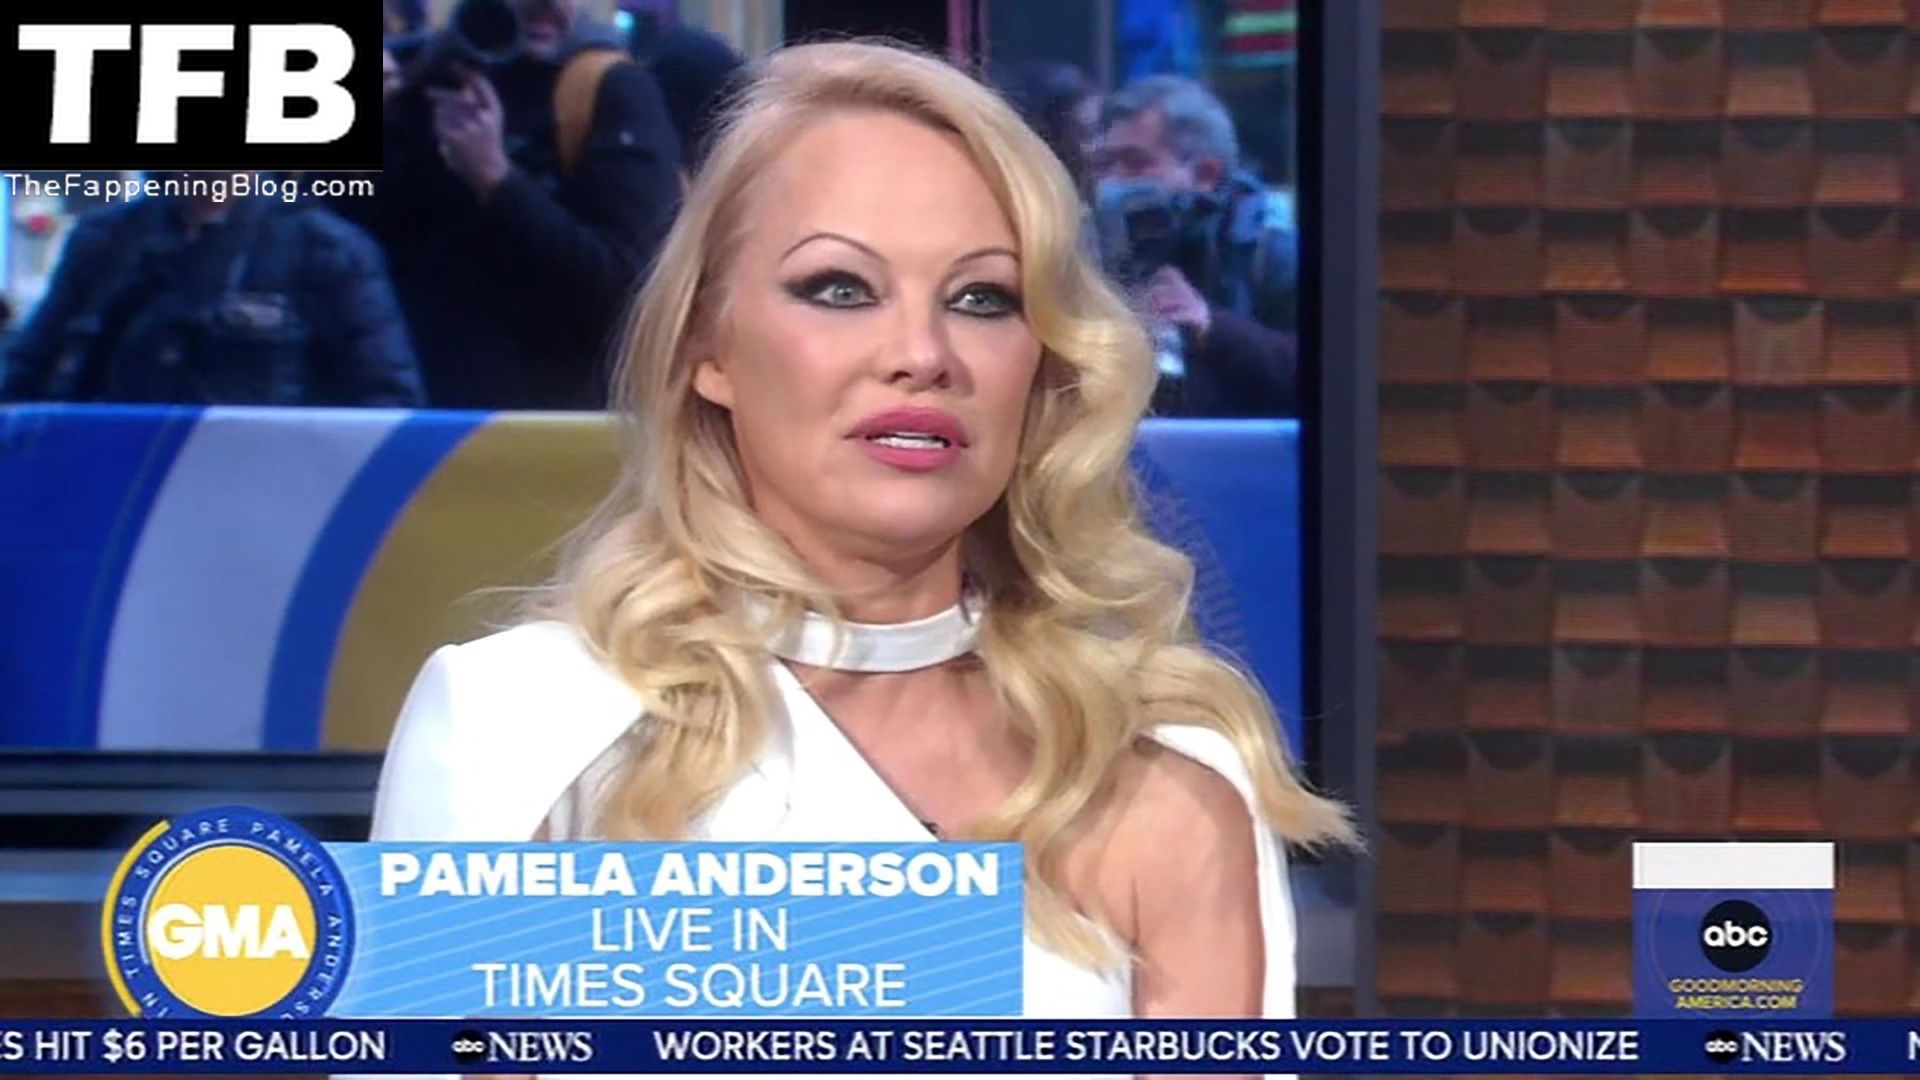 Pamela-Anderson-Hot-The-Fappening-Blog-7.jpg